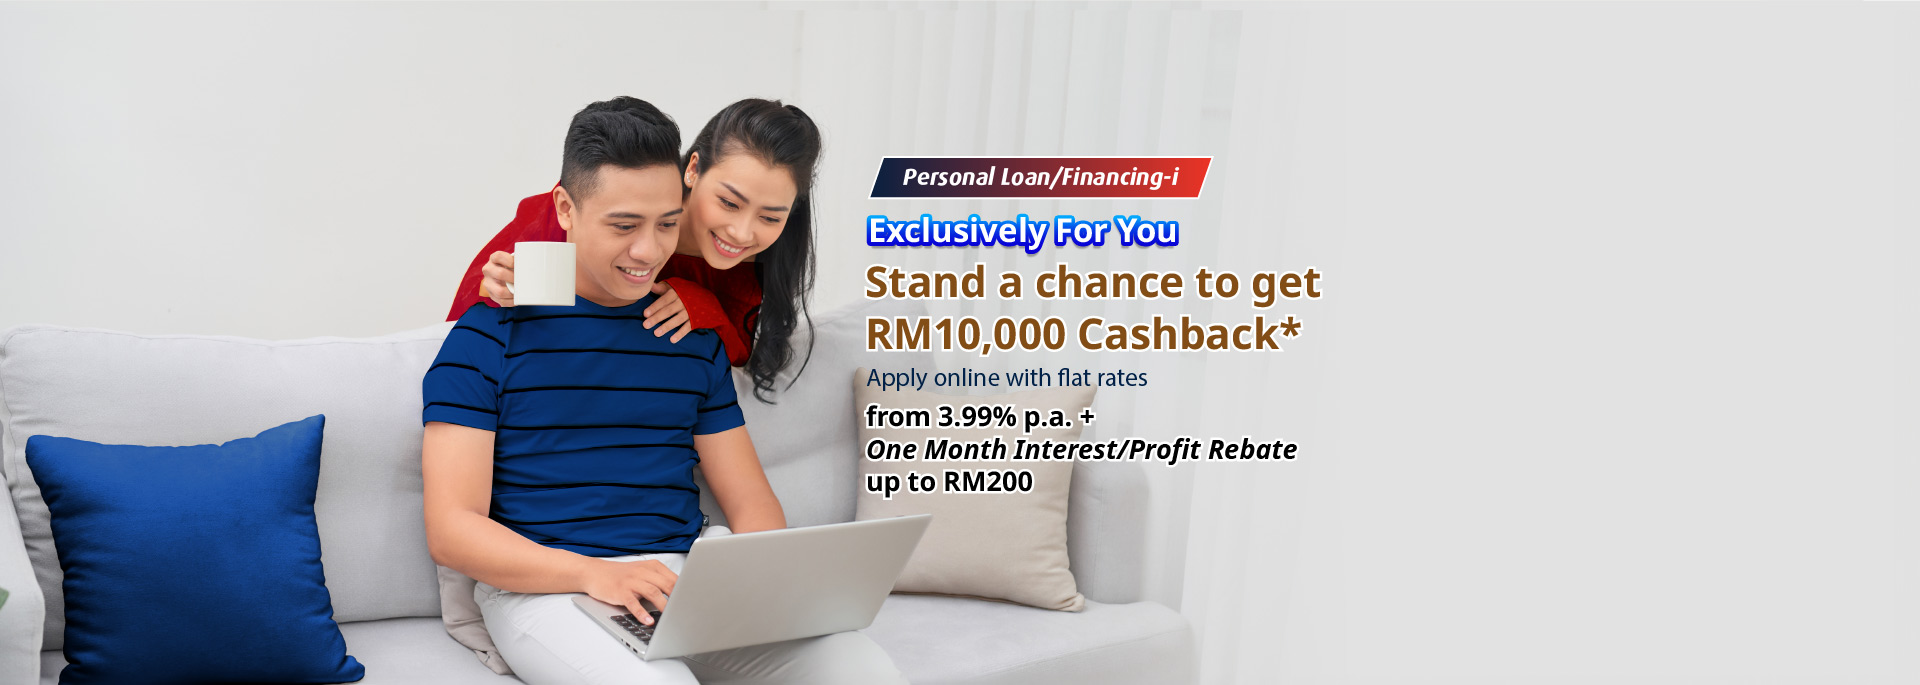 Personal Loan/Financing-i Online Offer